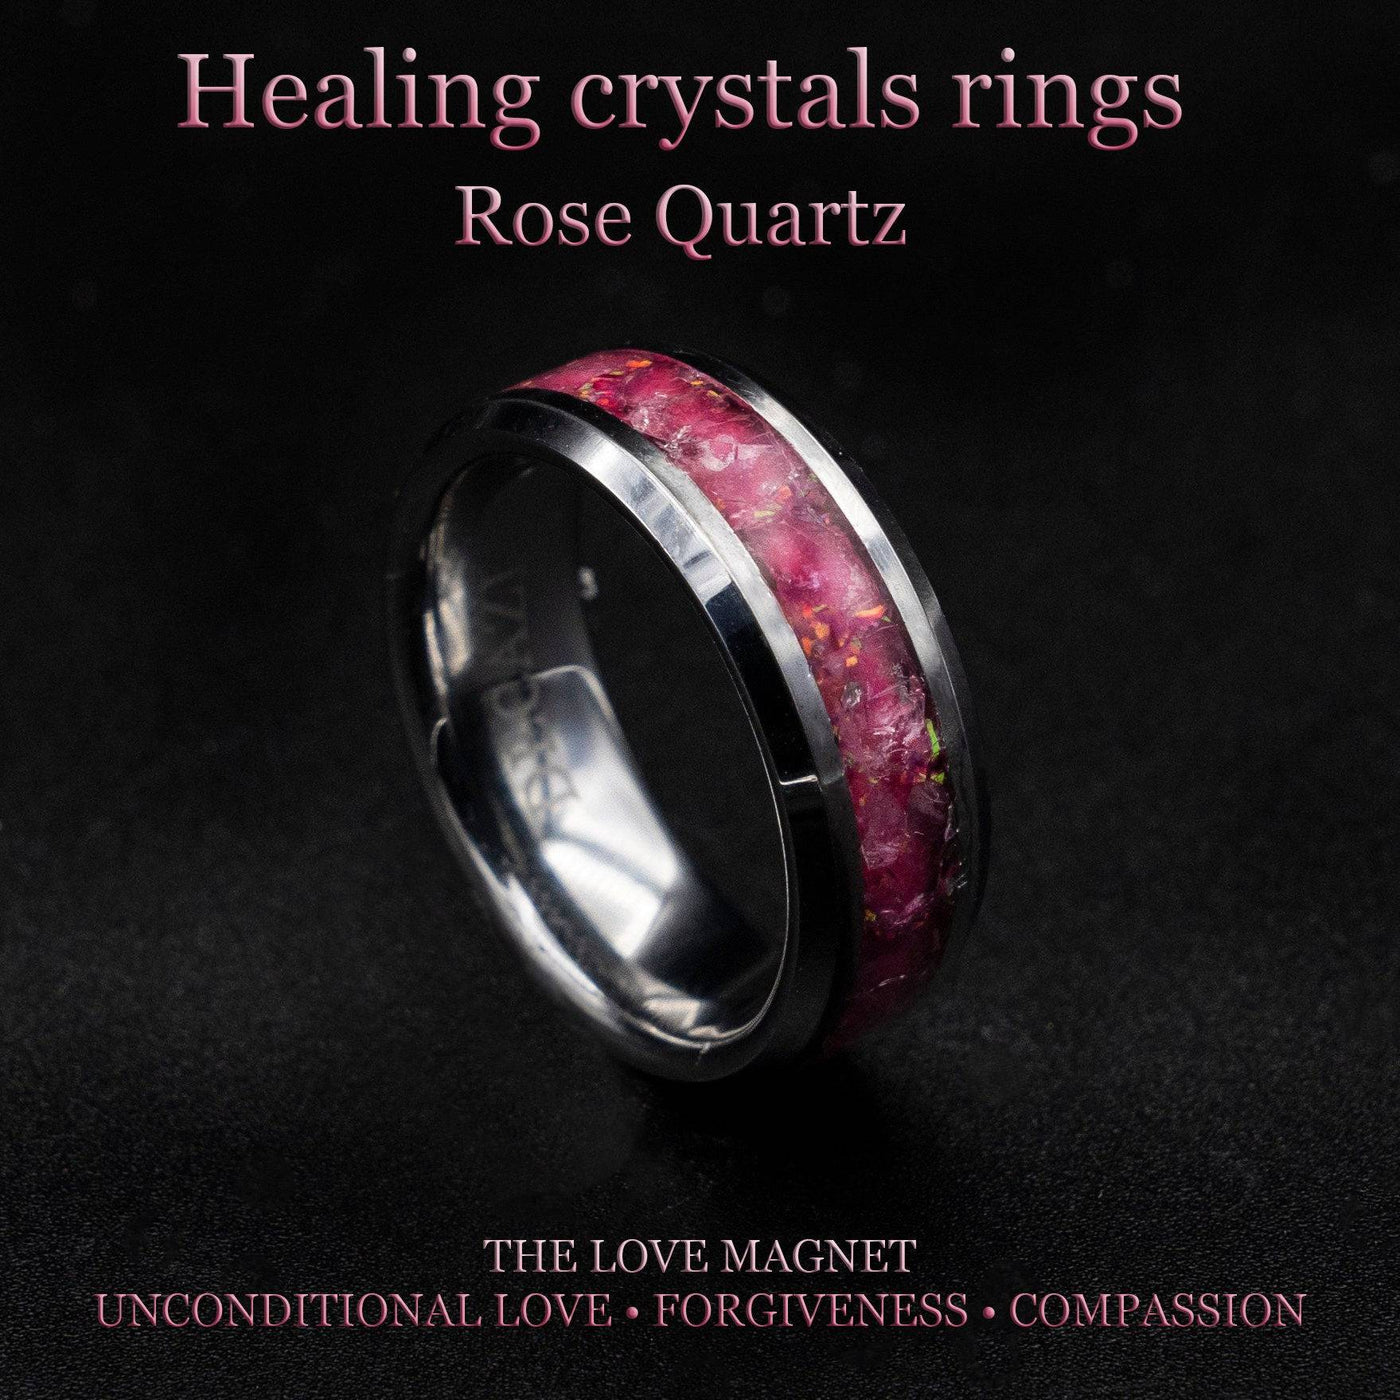 Tungsten Ring With Rose Quartz Inlay